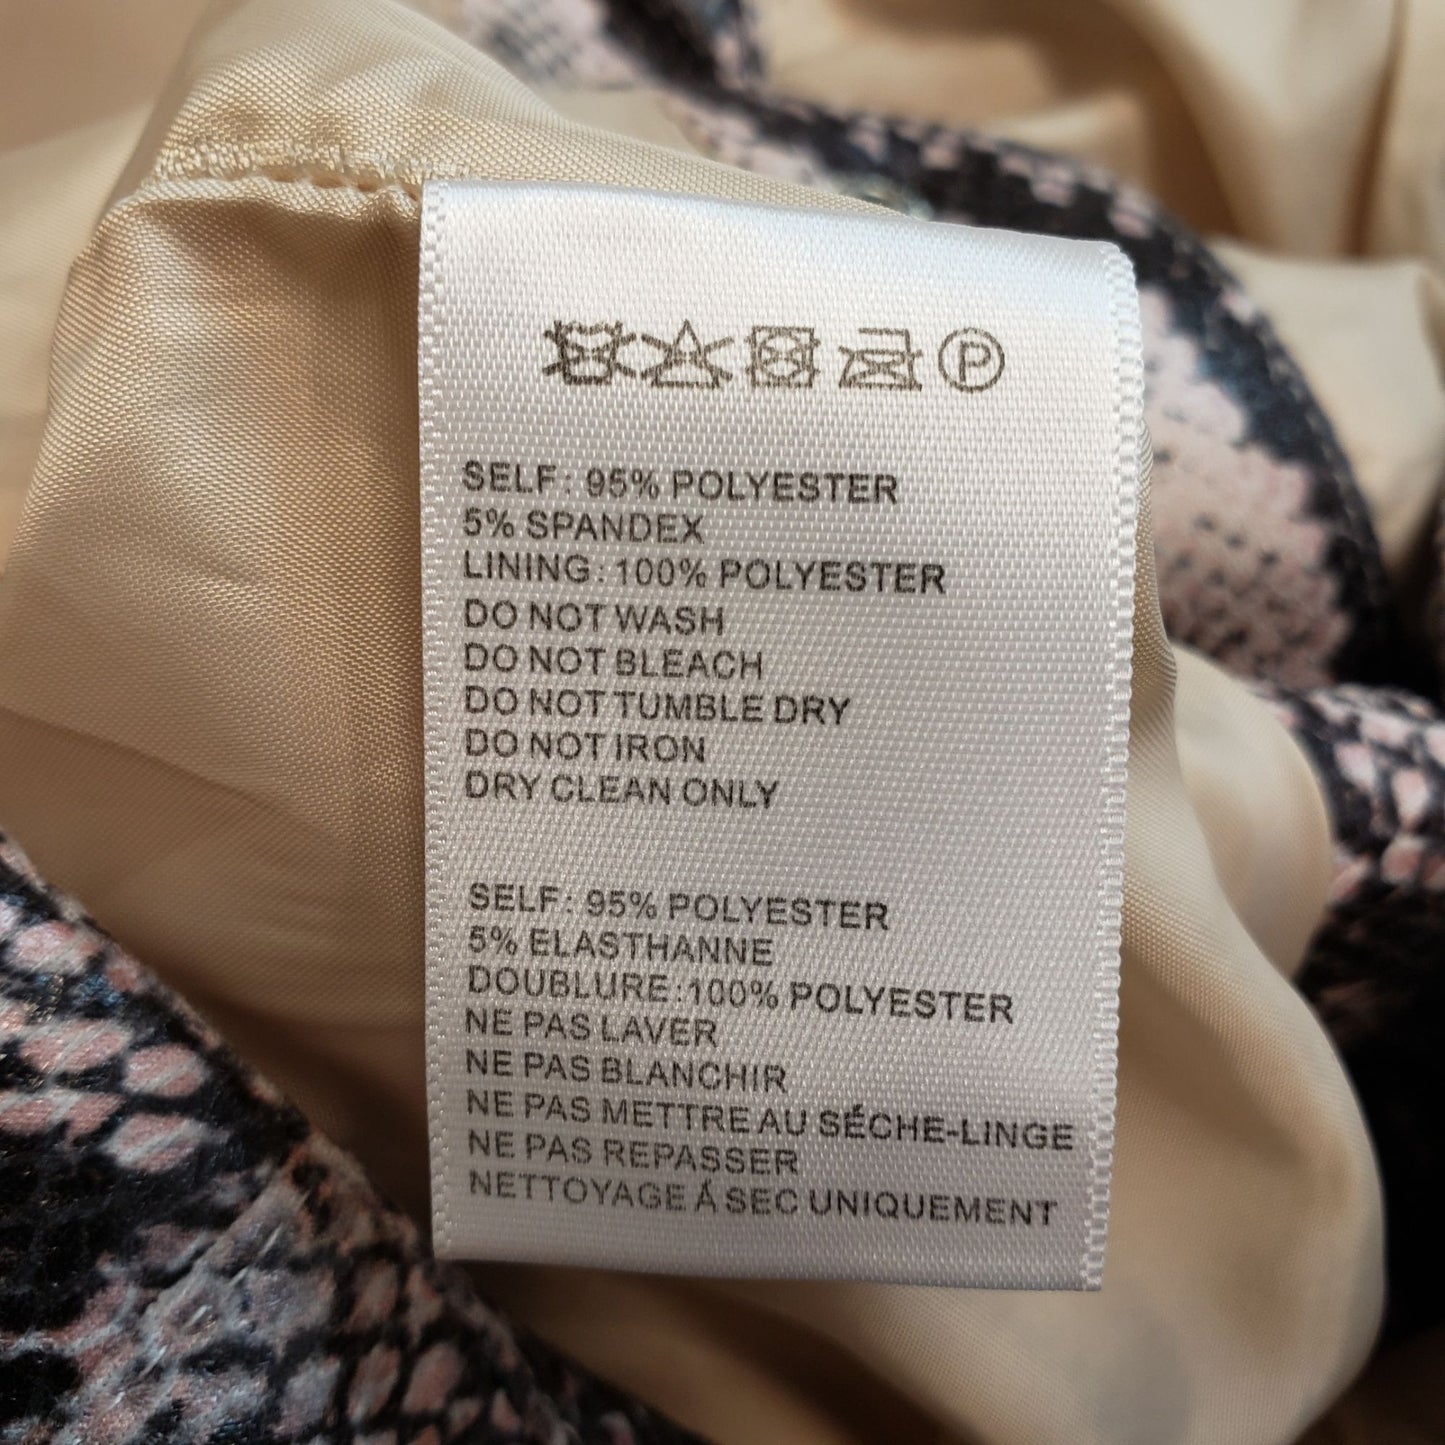 Urban Outfitters Vegan Leather Python Print Snap Front Mini Skirt Size Medium